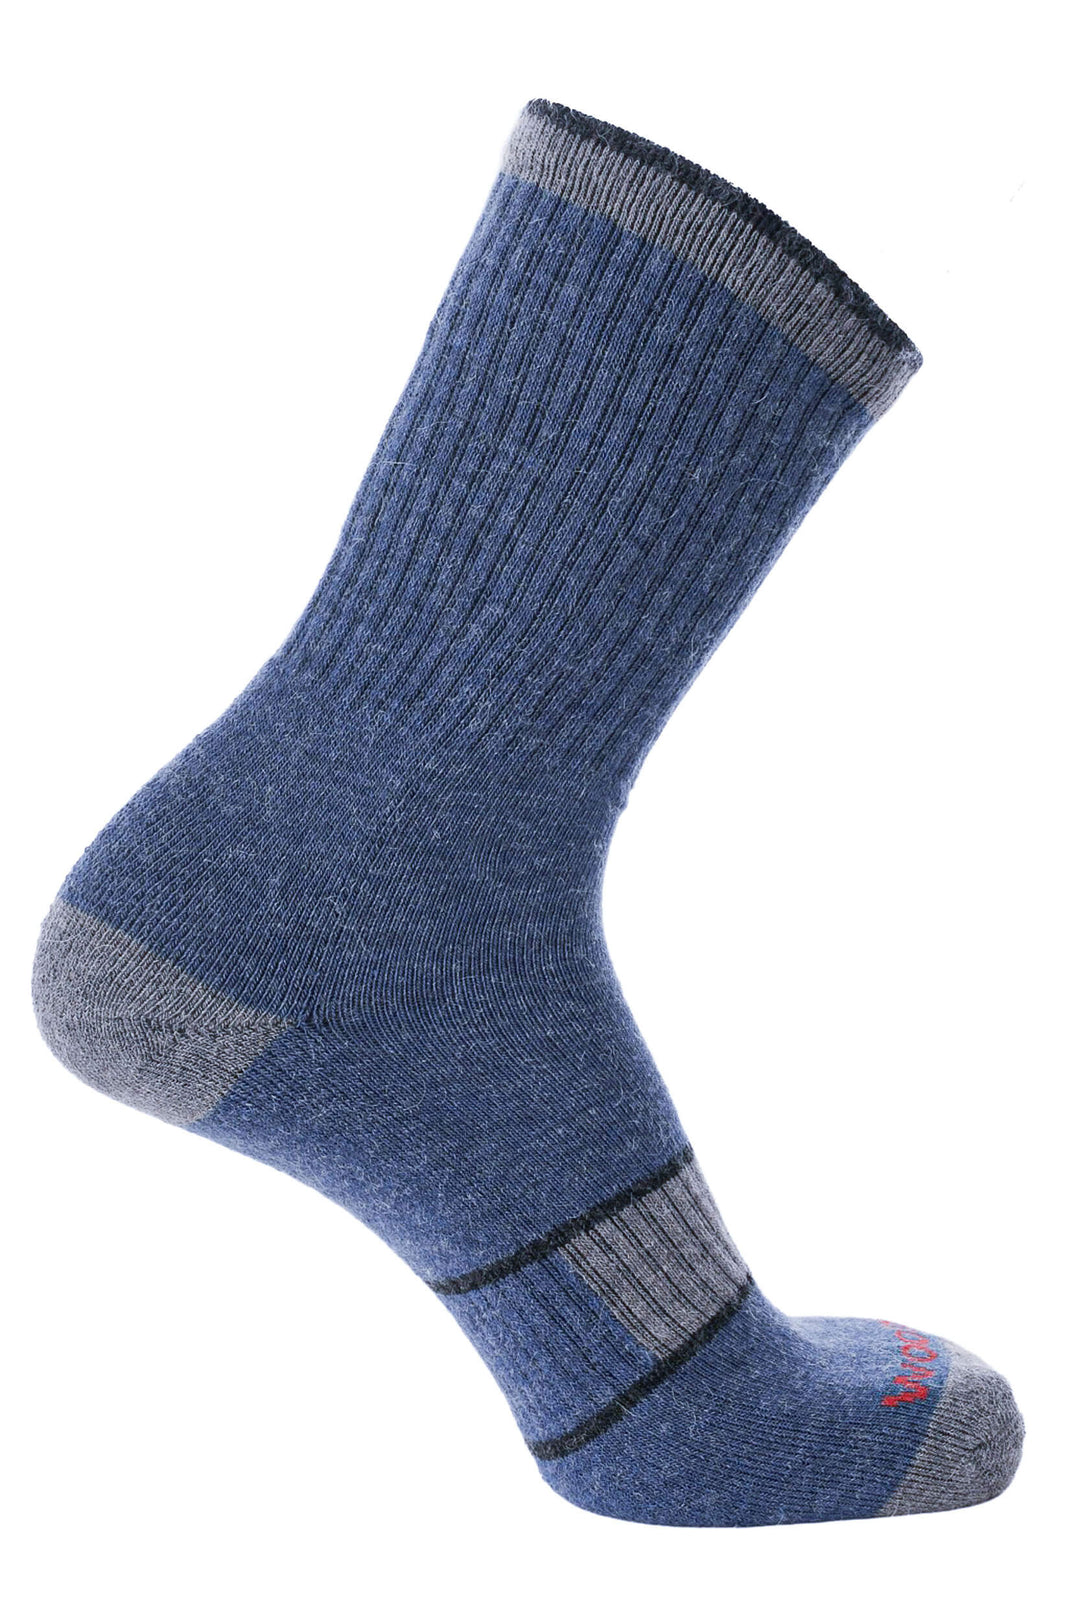 Alpaca Wool Socks - Blue - Nada Llama Crew Socks - Woodroad Gear Co.